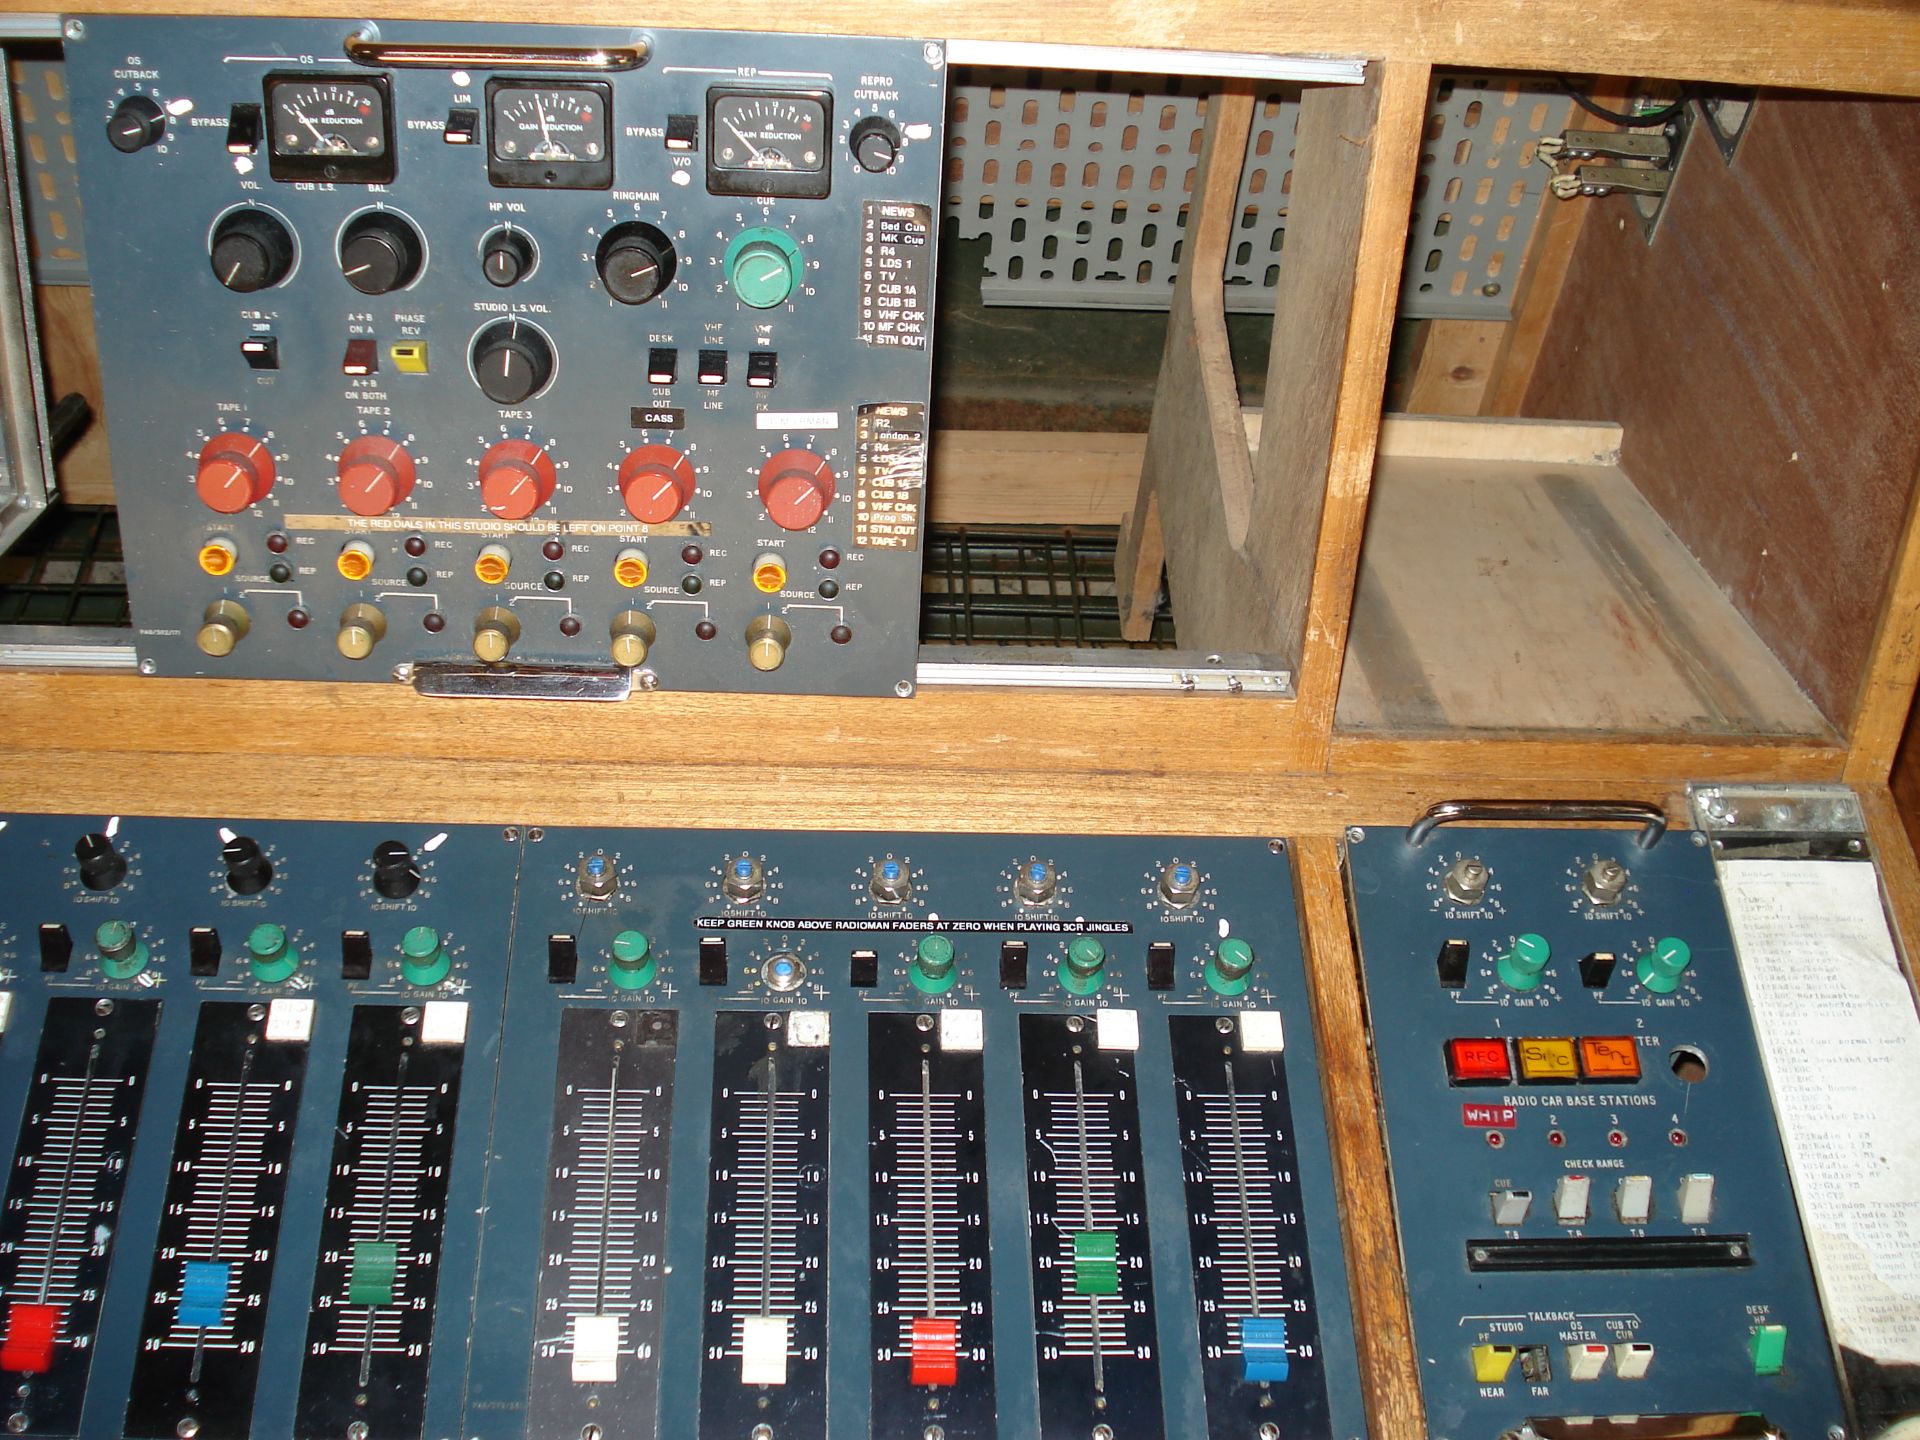 BBC LOCAL RADION MK3 DESK AND TECHNICS SP10 TURNTABLE - Image 4 of 8